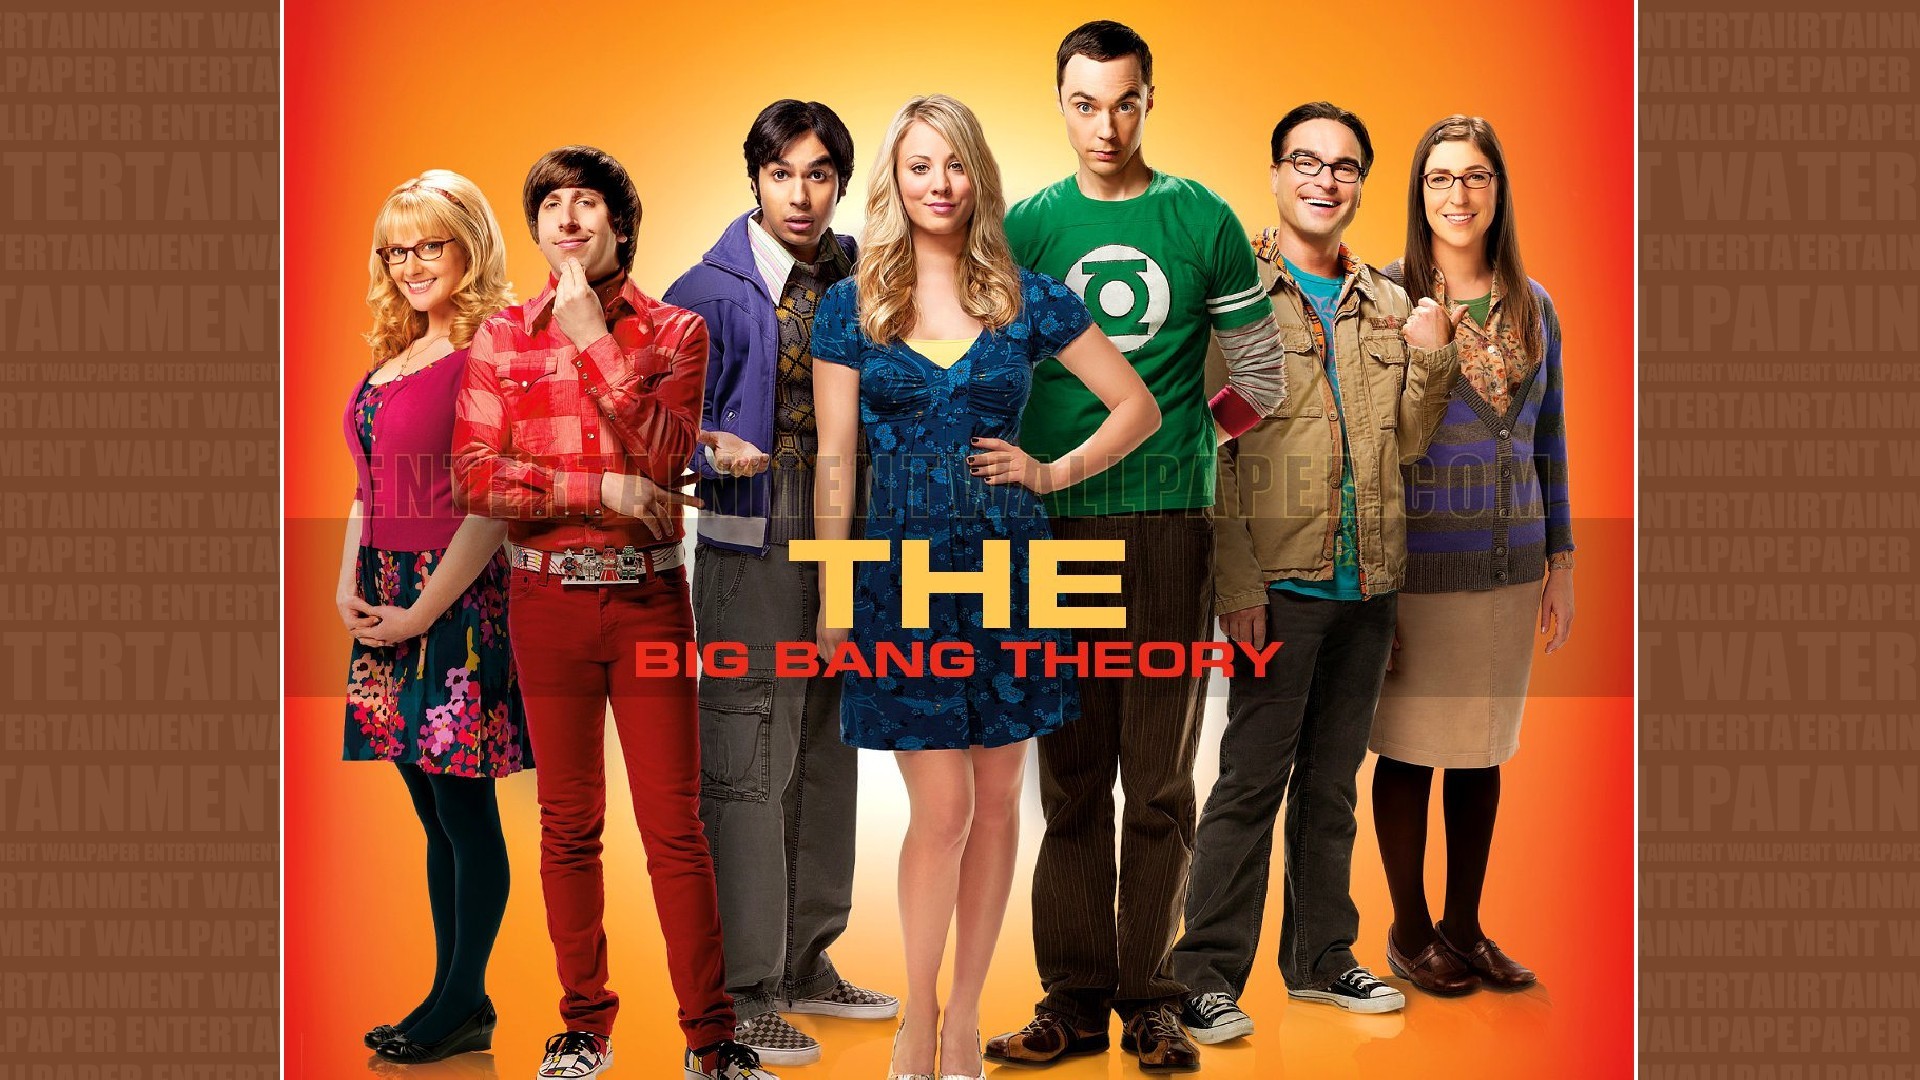 1920x1080 The Big Bang Theory Wallpaper - Original size, download now.